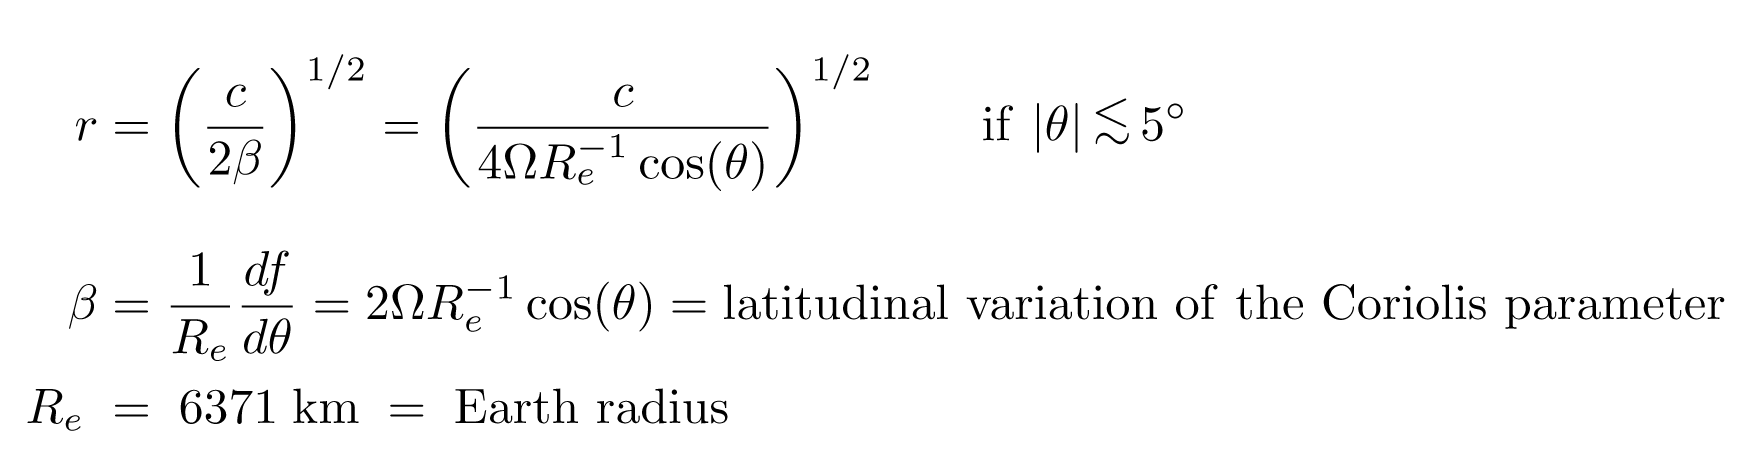 equations 2